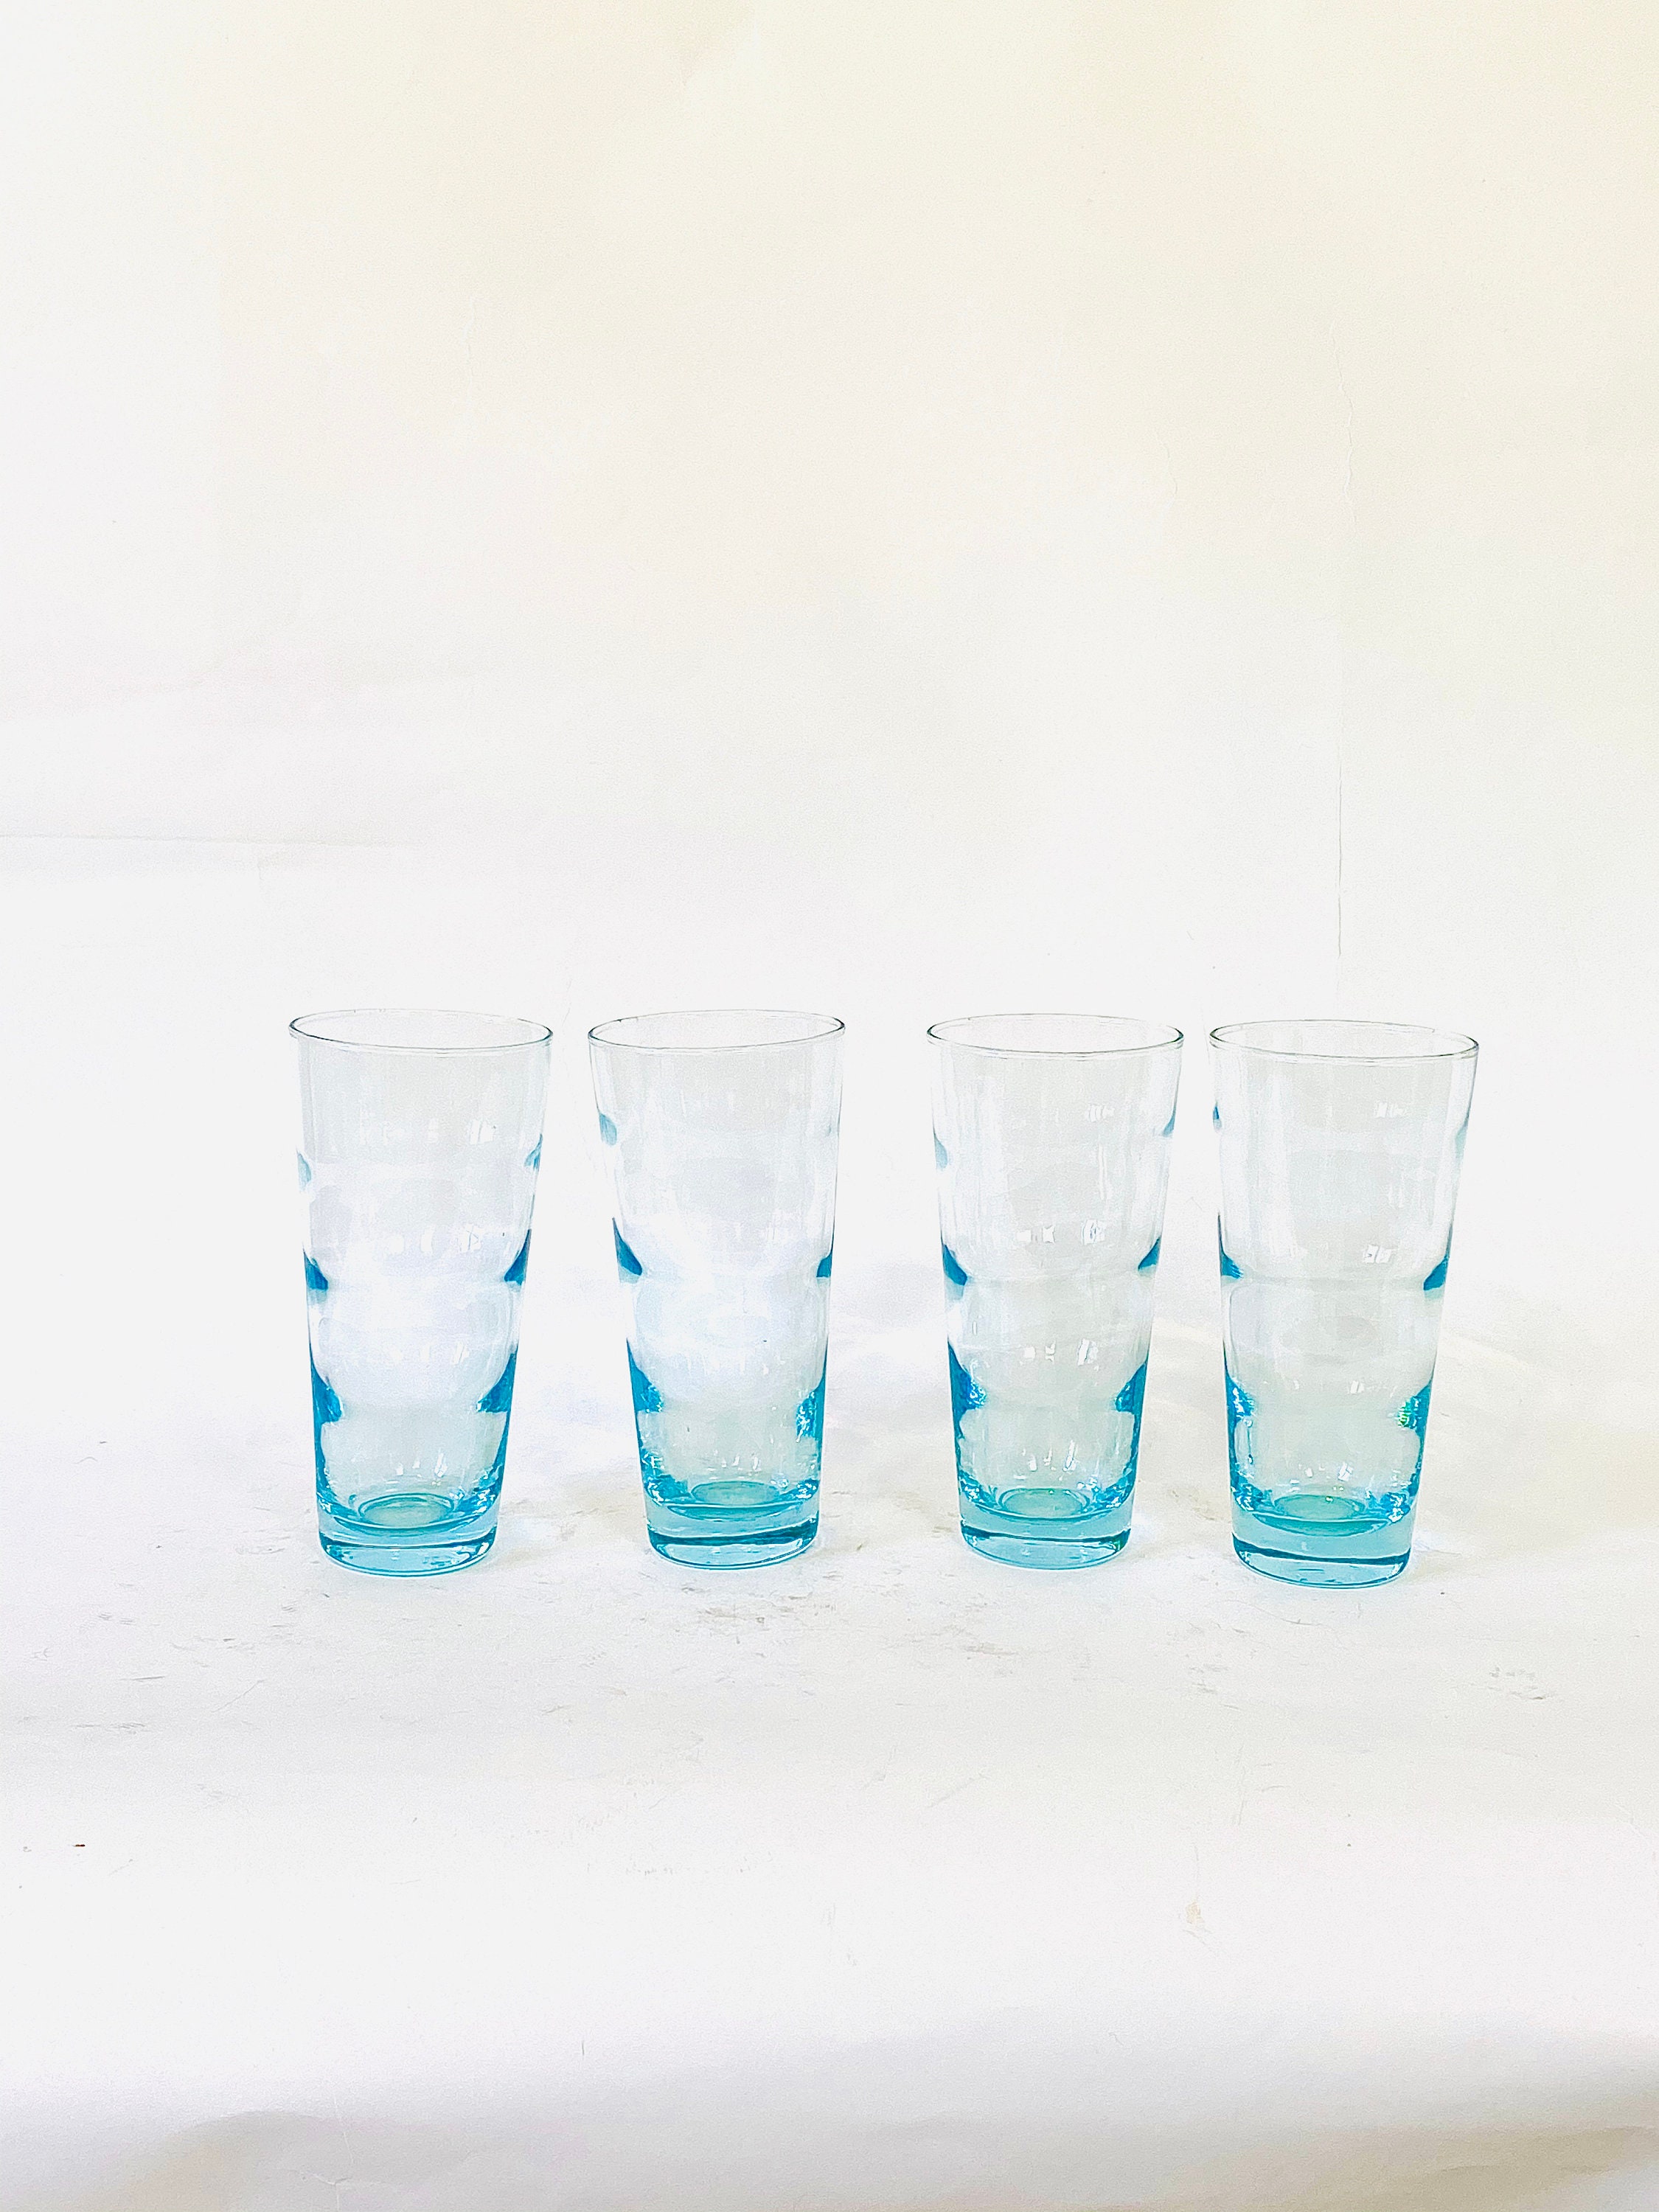 4- Modern Drinking Glasses Smokey Blu Square Bottom Glasses 6-1/4 Tall  Vintage